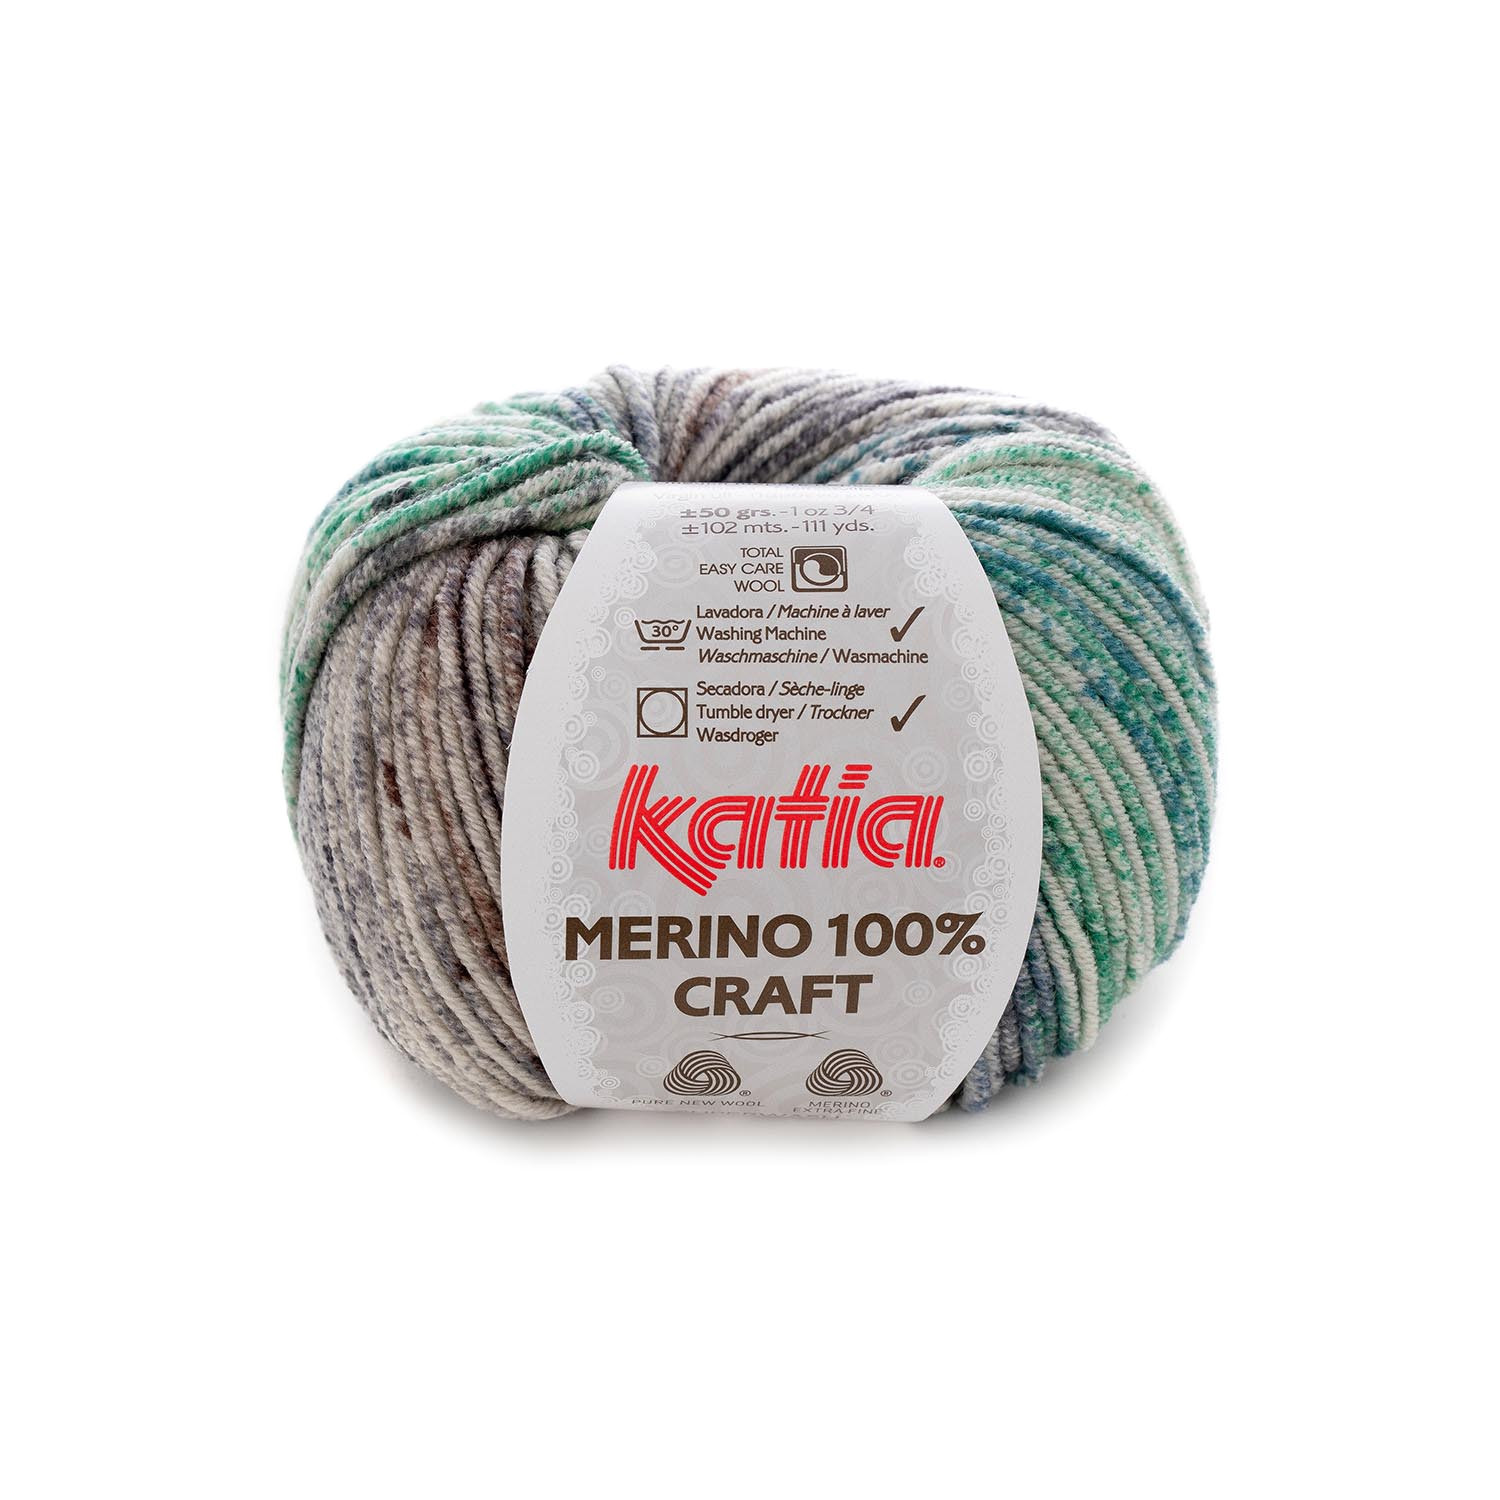 yarn wool merino100craft knit merino extrafine ochre brown green autumn winter katia 306 g jpg